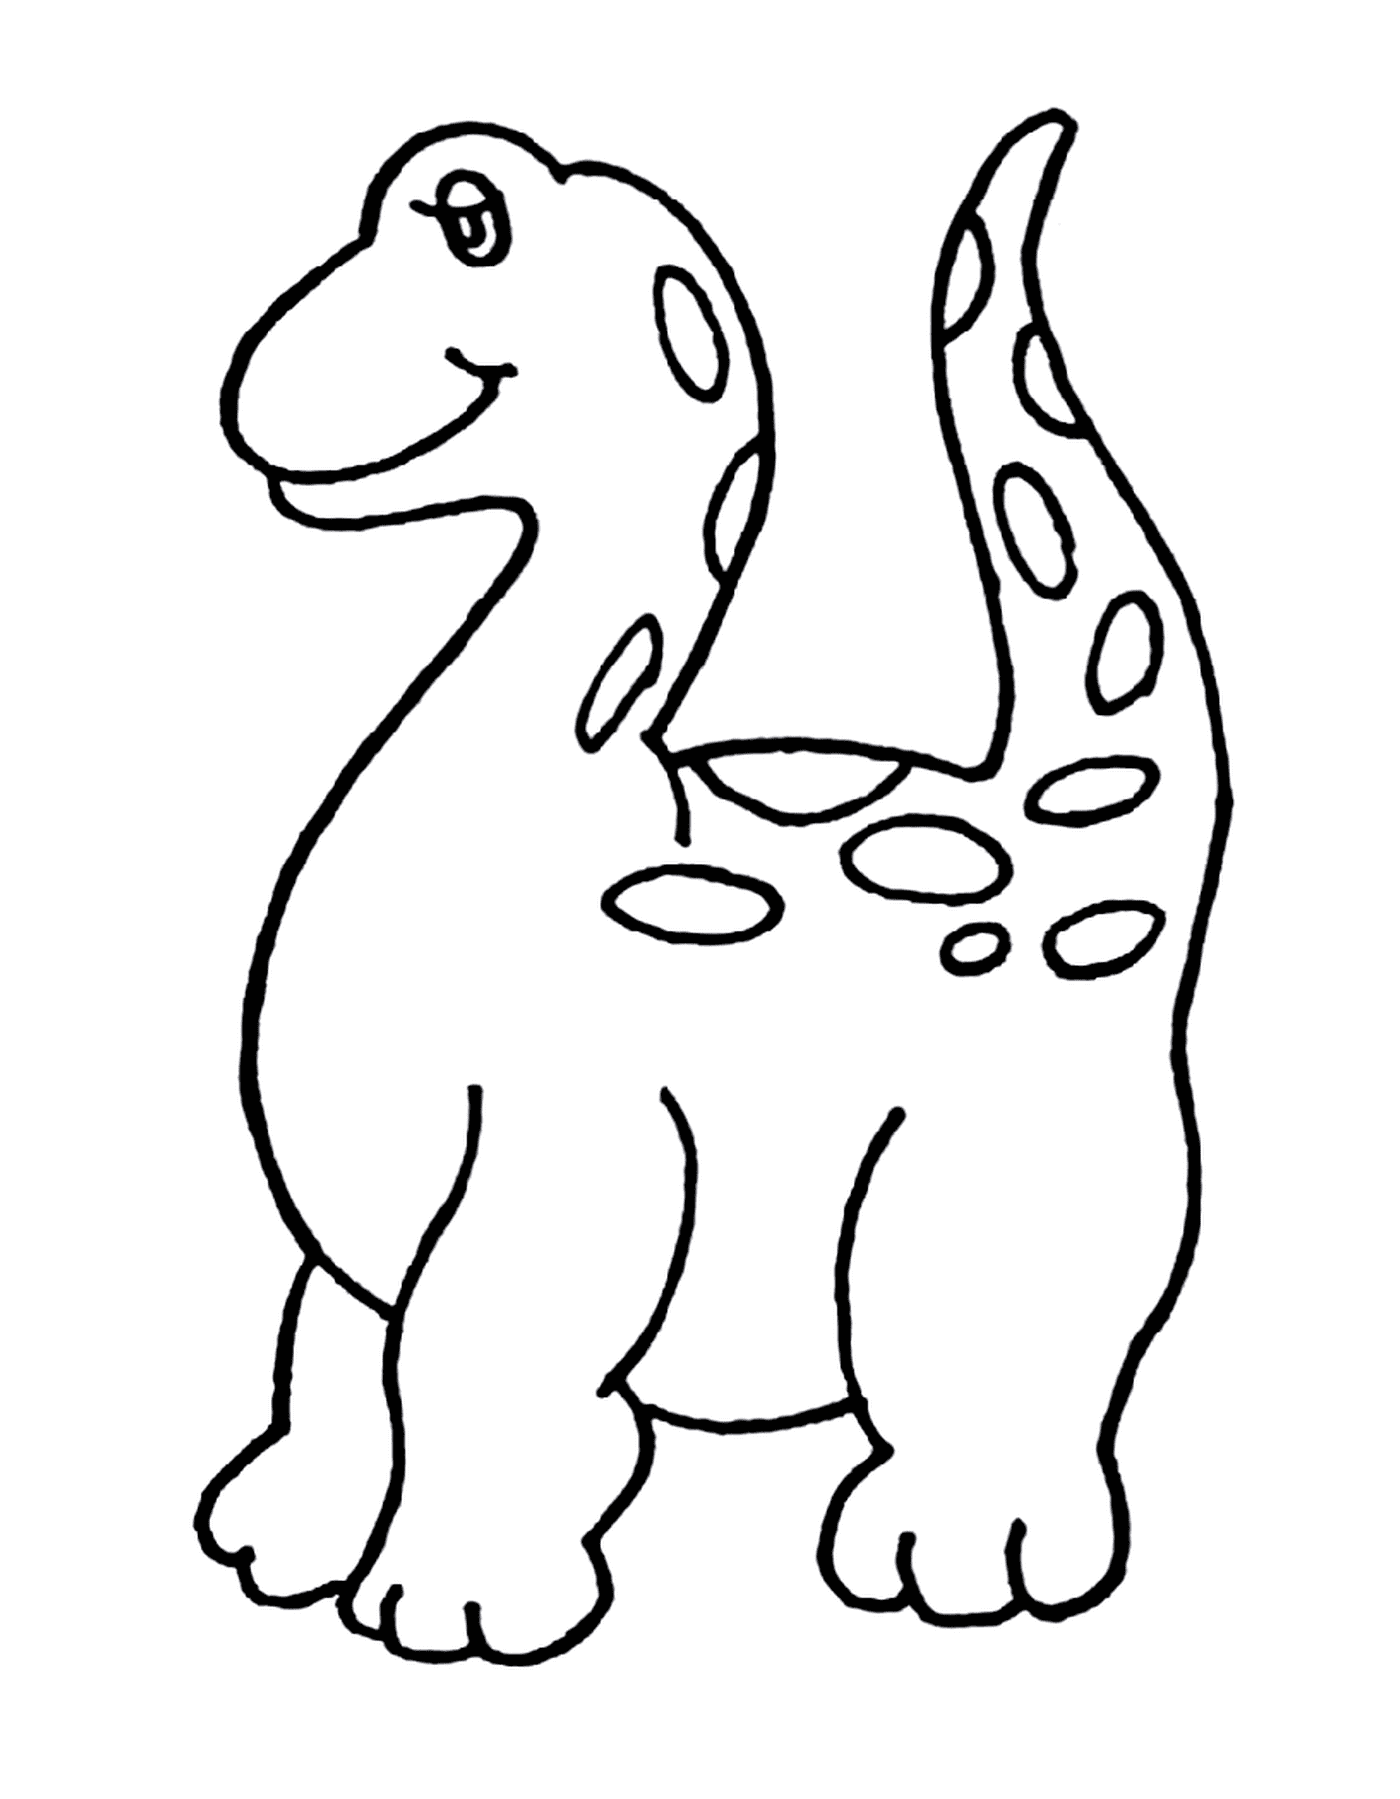  uma girafa 